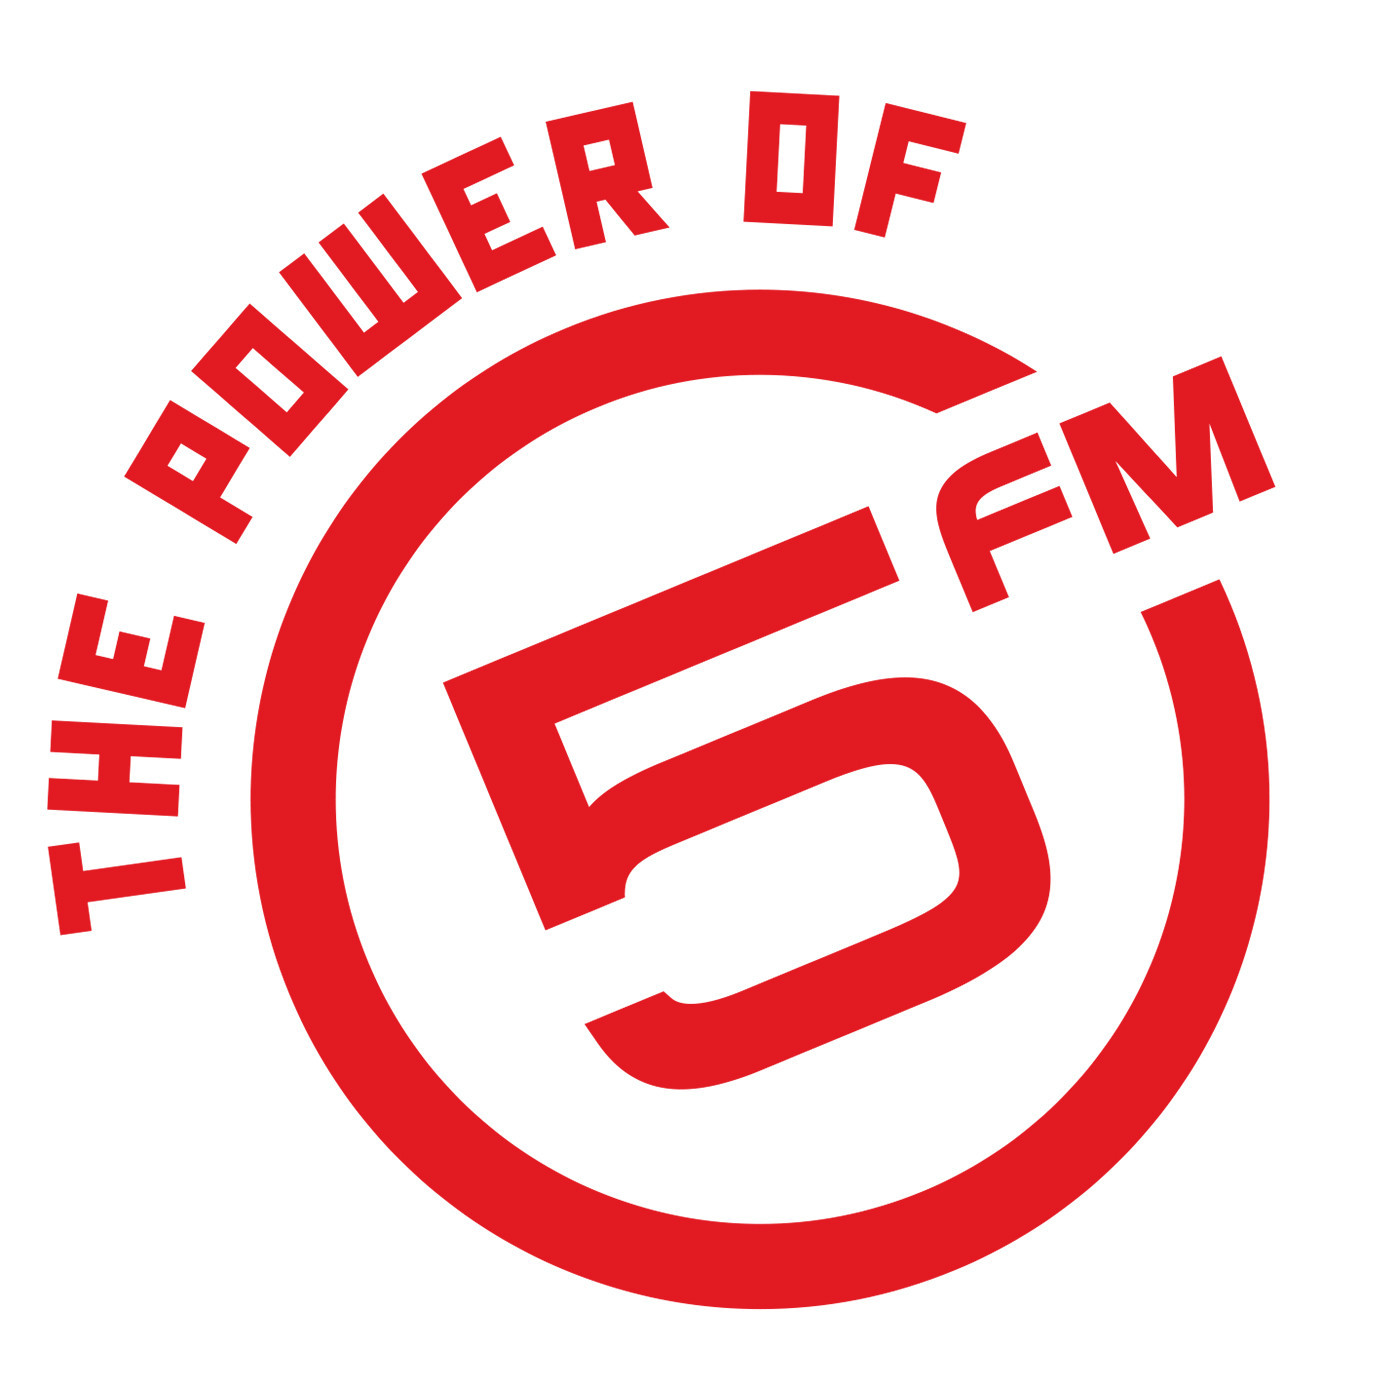 5FM LEGENDS VINNY DA VINCI INTERVIEW (5 FEB)